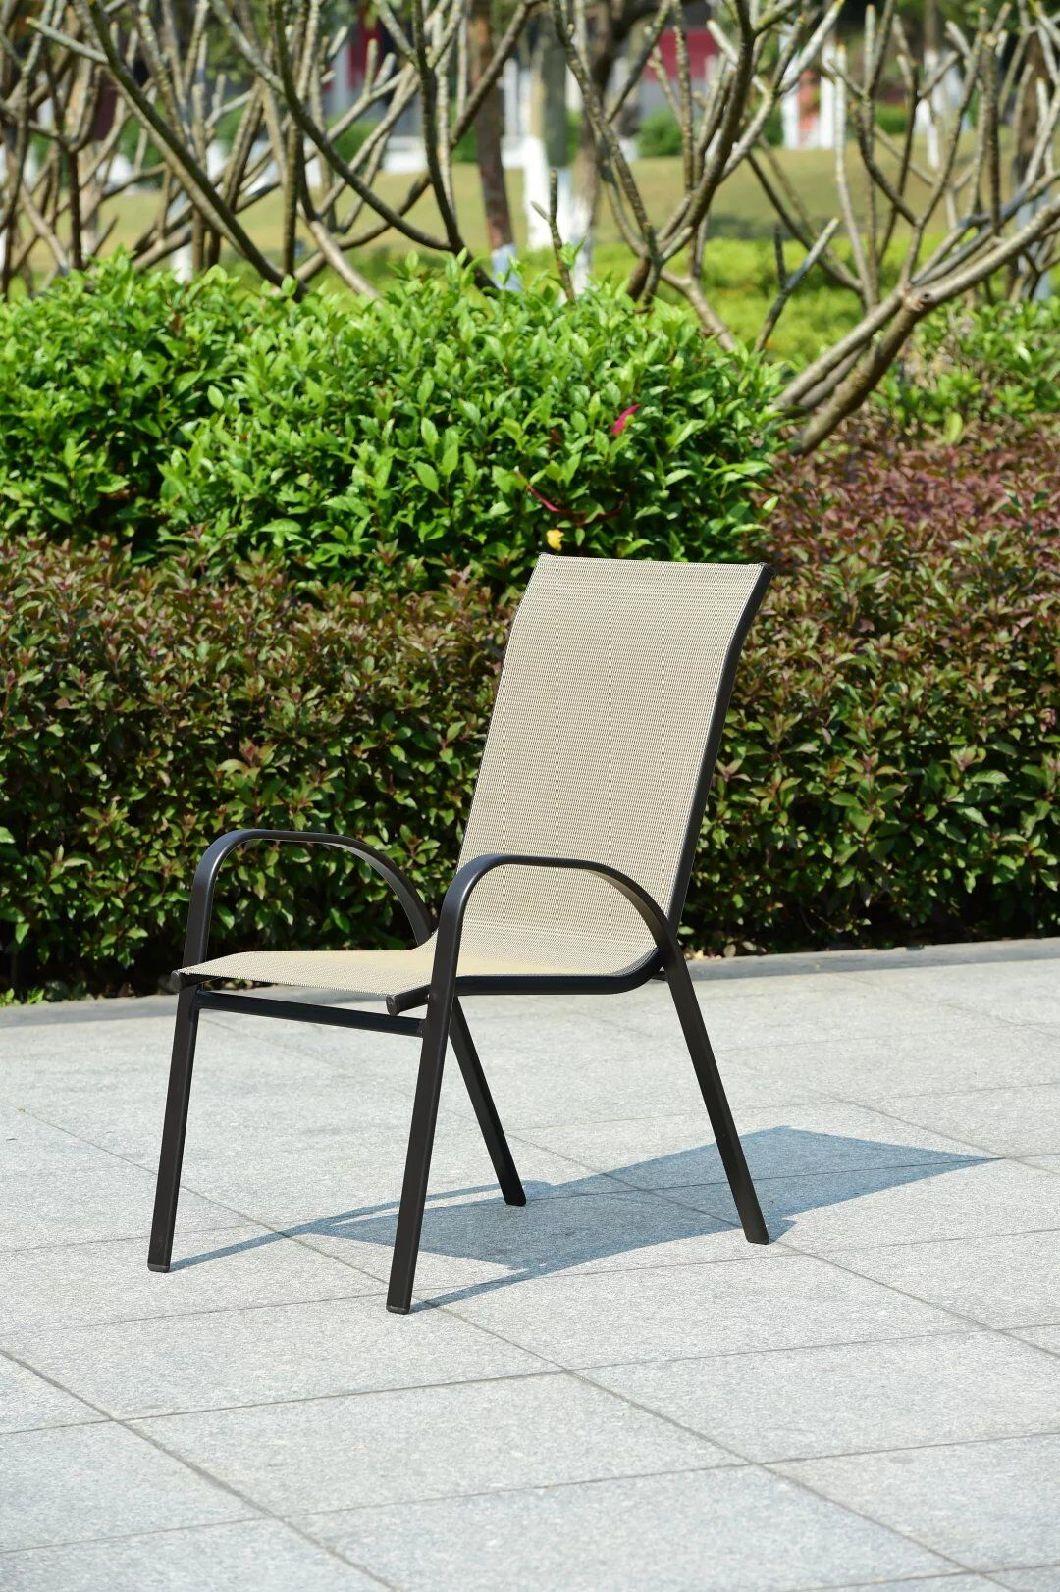 Modern Iron Frame Outdoor Garden Coffee Shop Hotel Restaurant Dining Chair